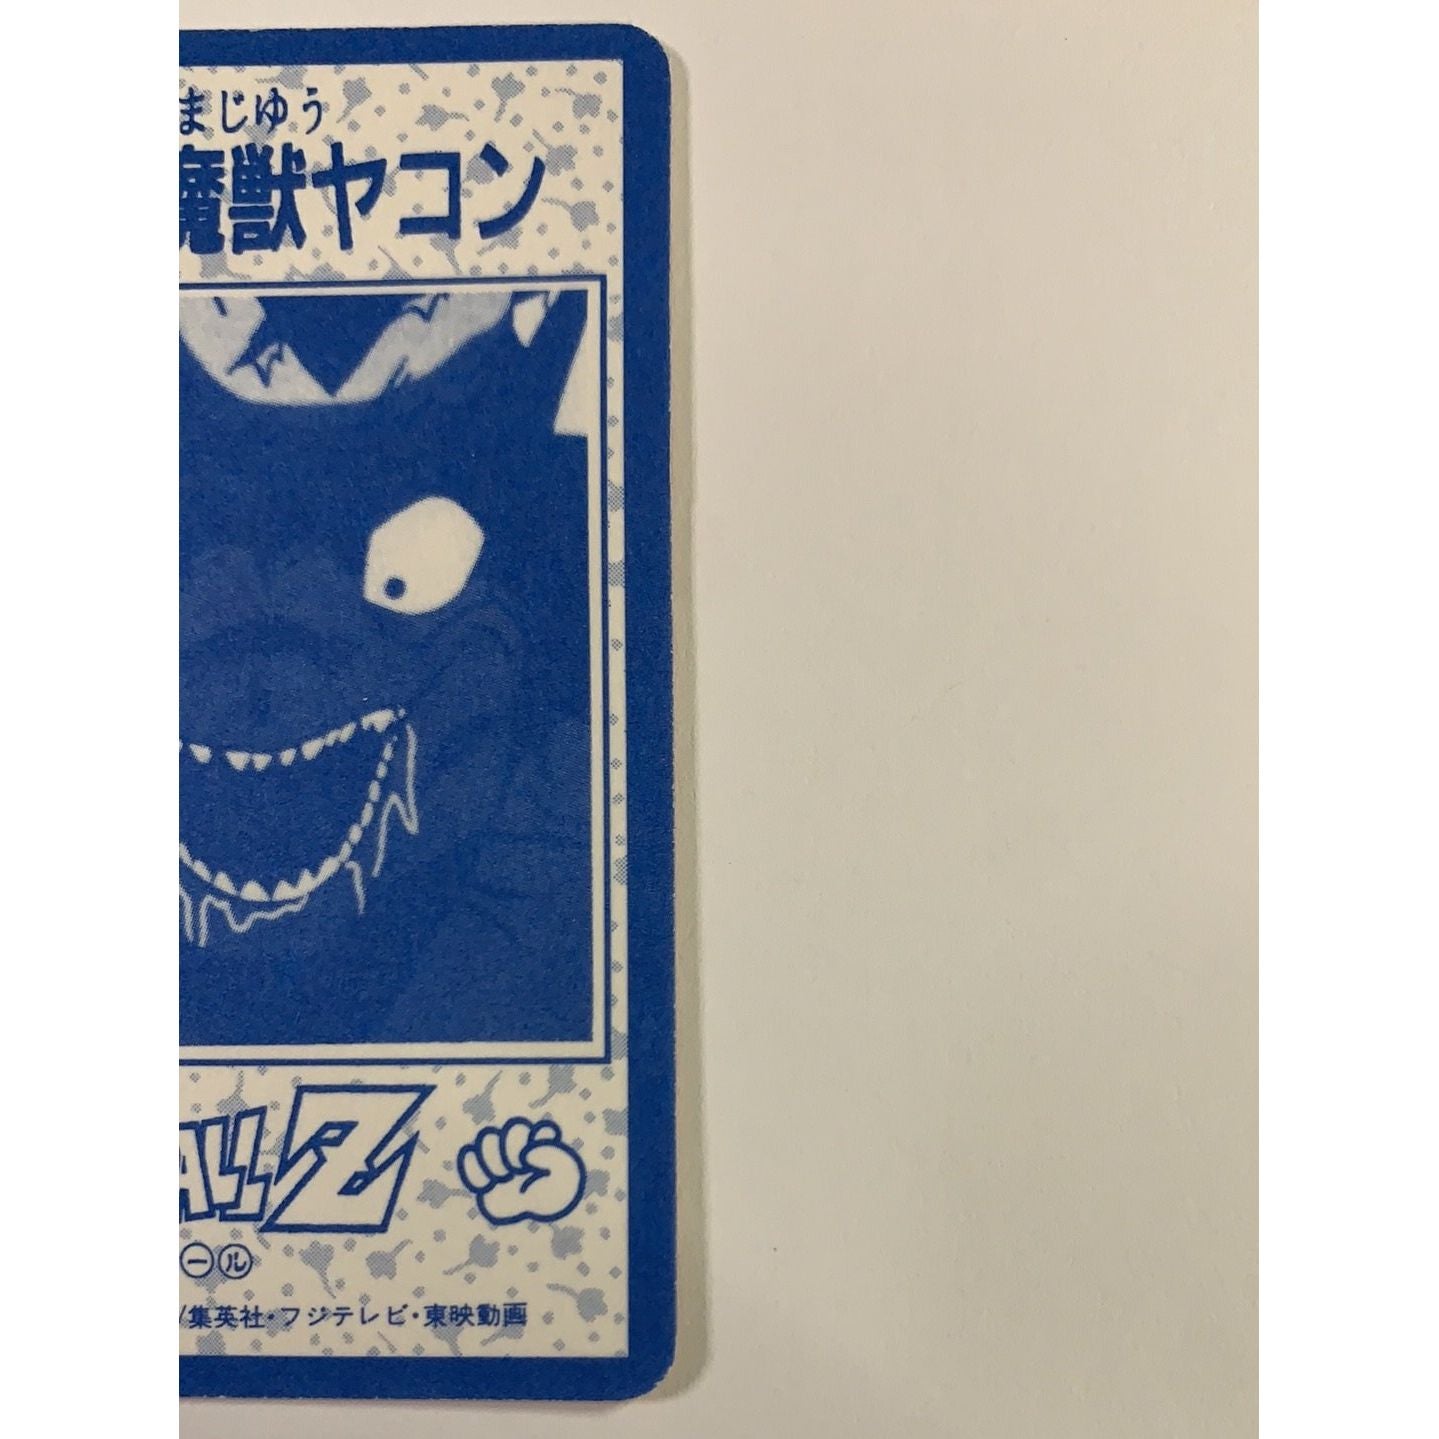  1995 Cardass Dragon Ball Z Mini Super Saiyan Goku  Local Legends Cards & Collectibles